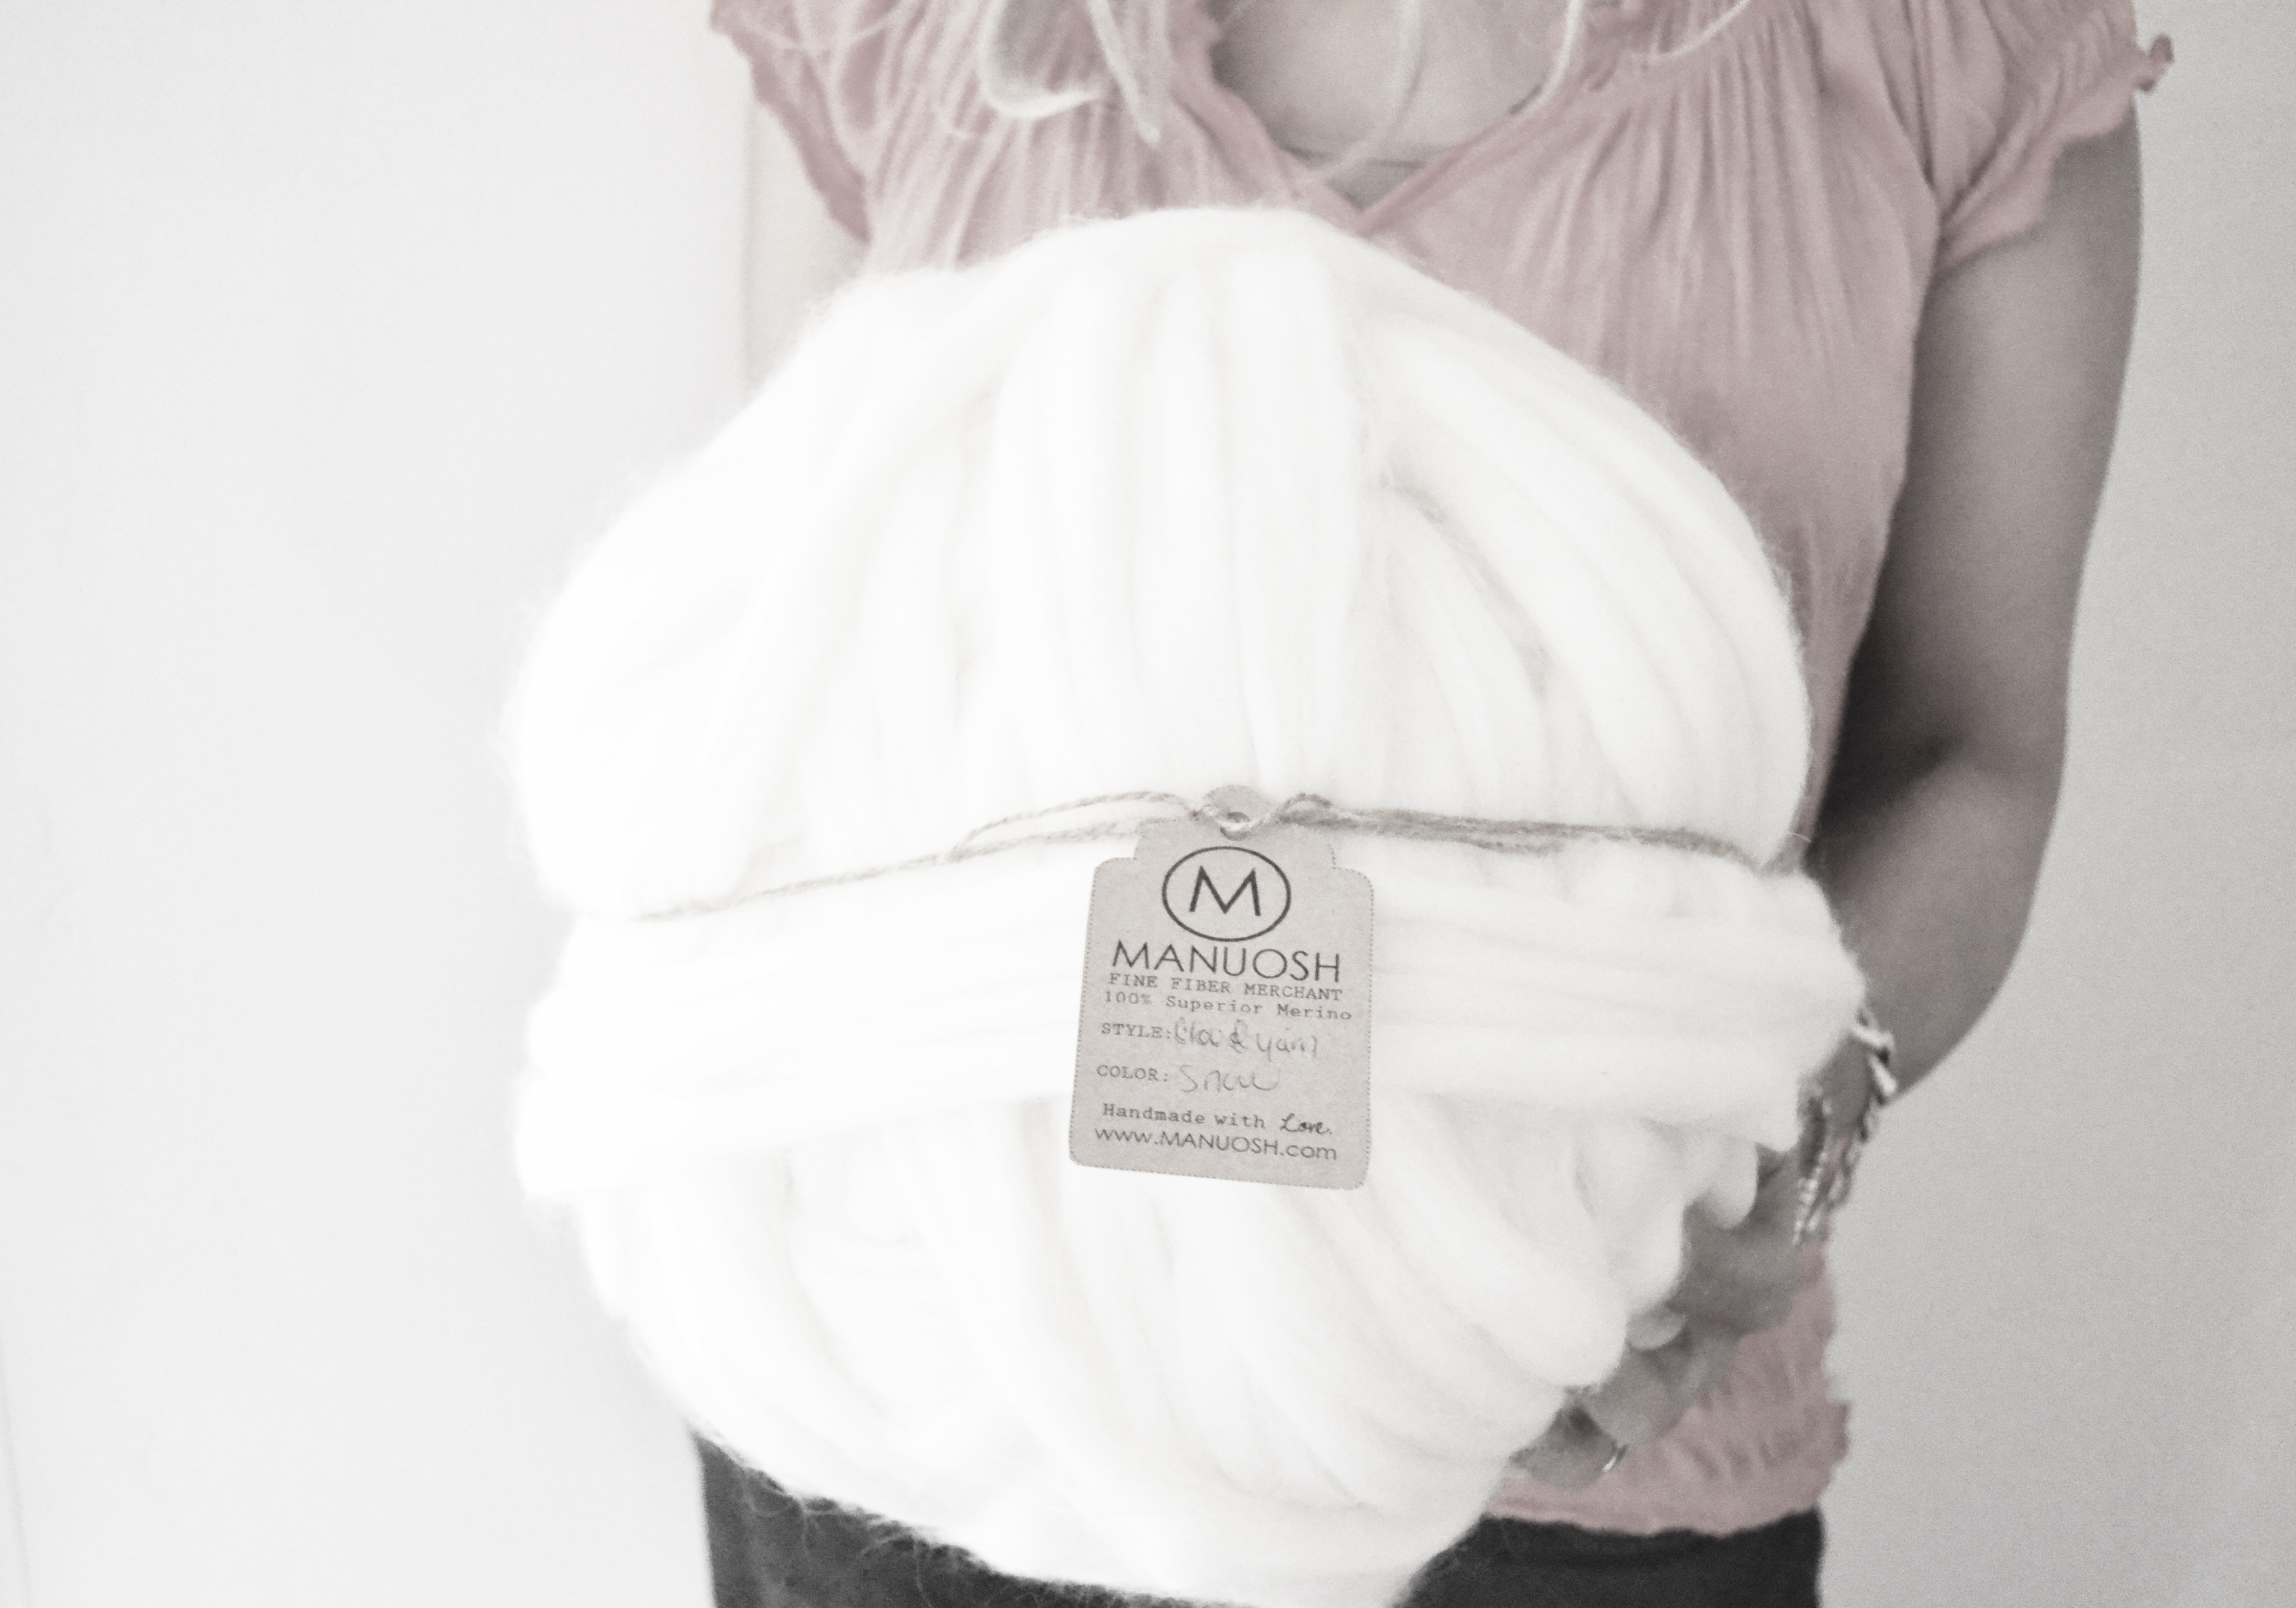 Manuosh Massive “Cloud” Super Chunky Merino Wool Yarn – 140 yards